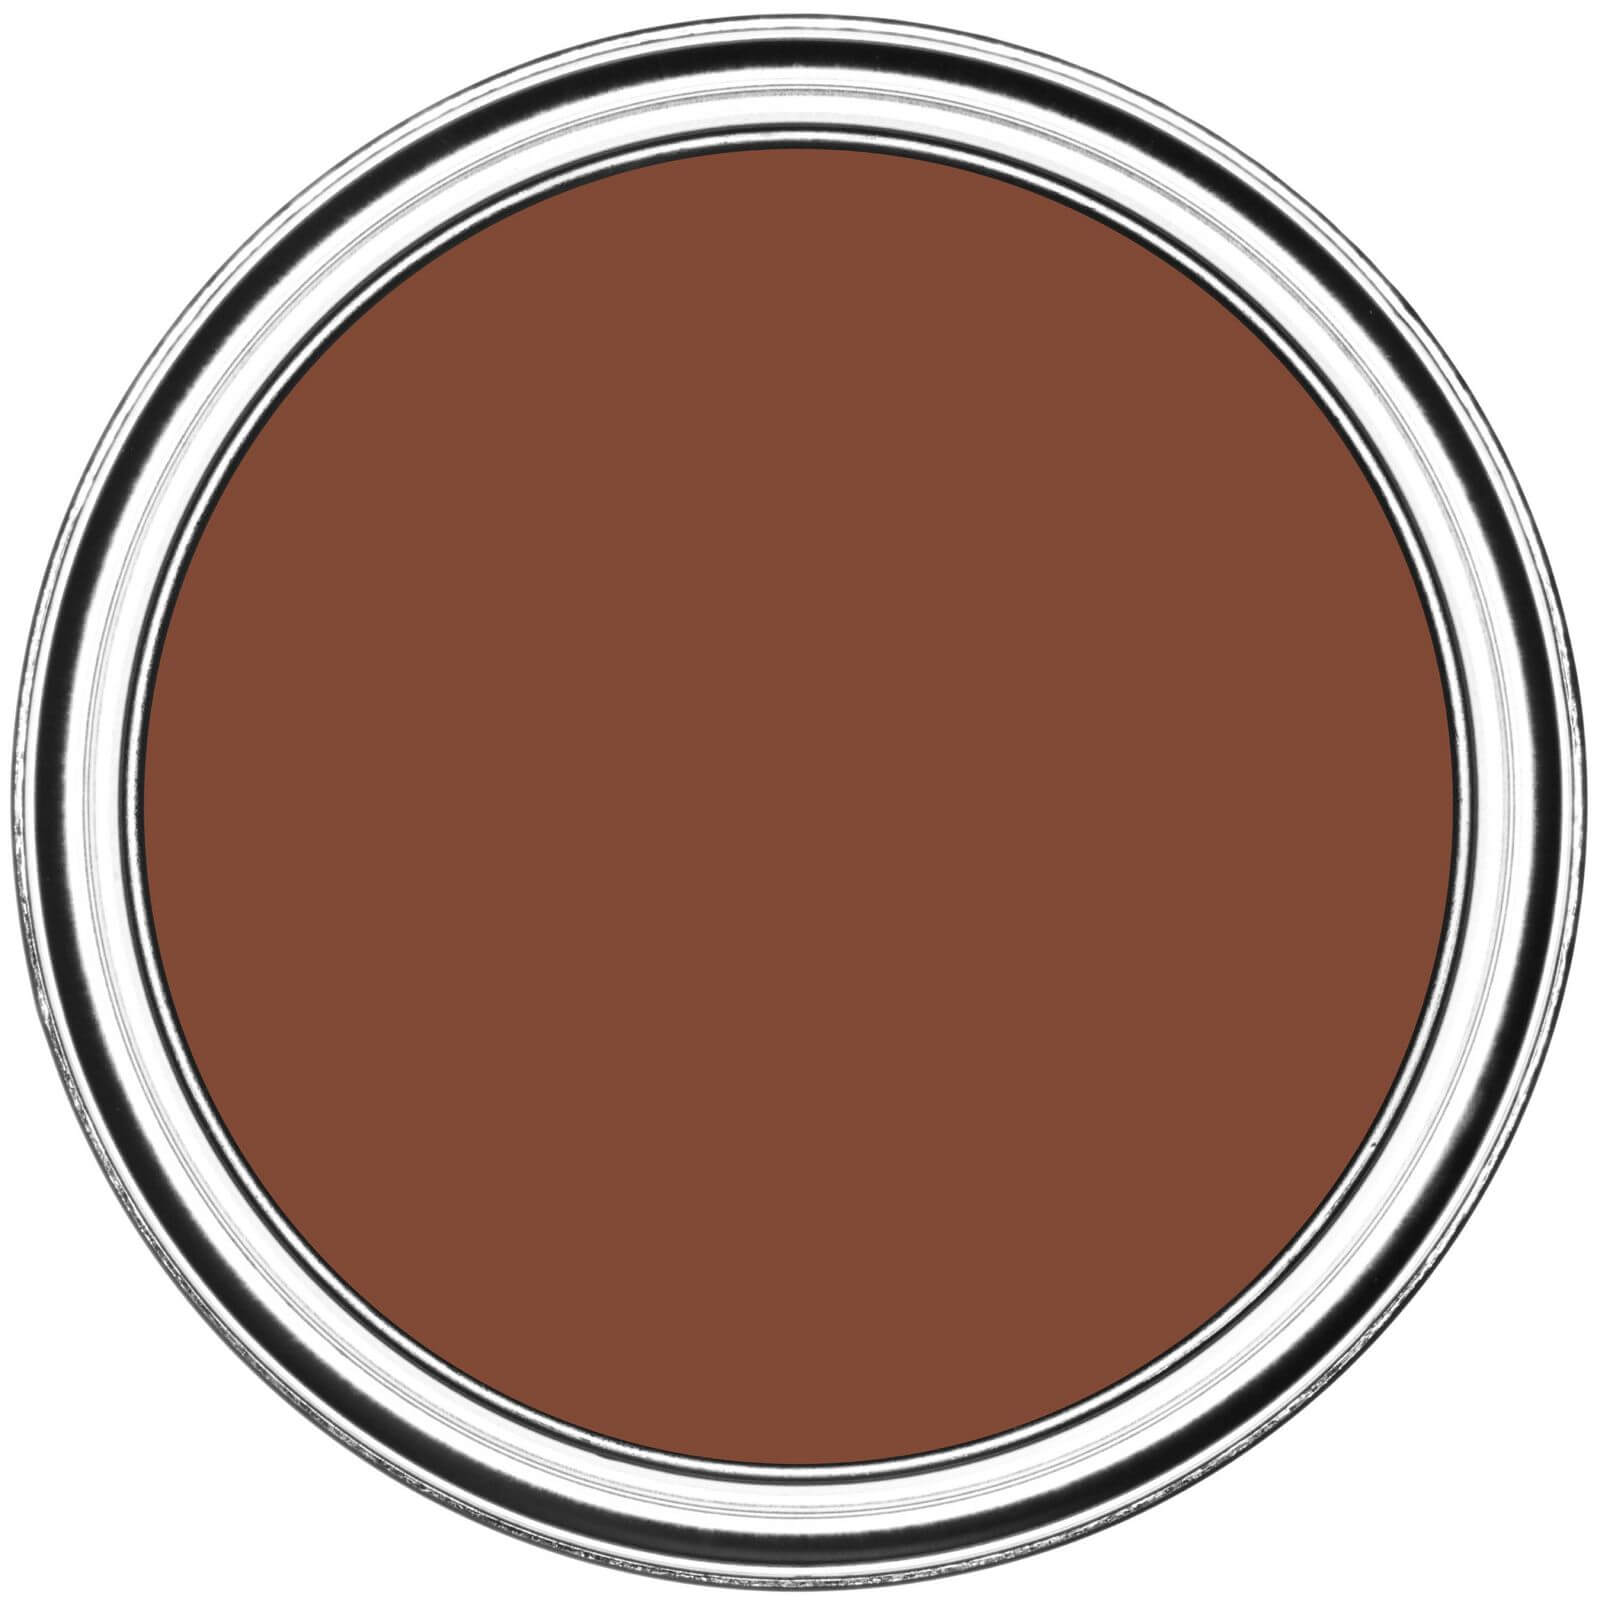 Rust-Oleum Painters Touch Enamel Cinnamon - 20ml